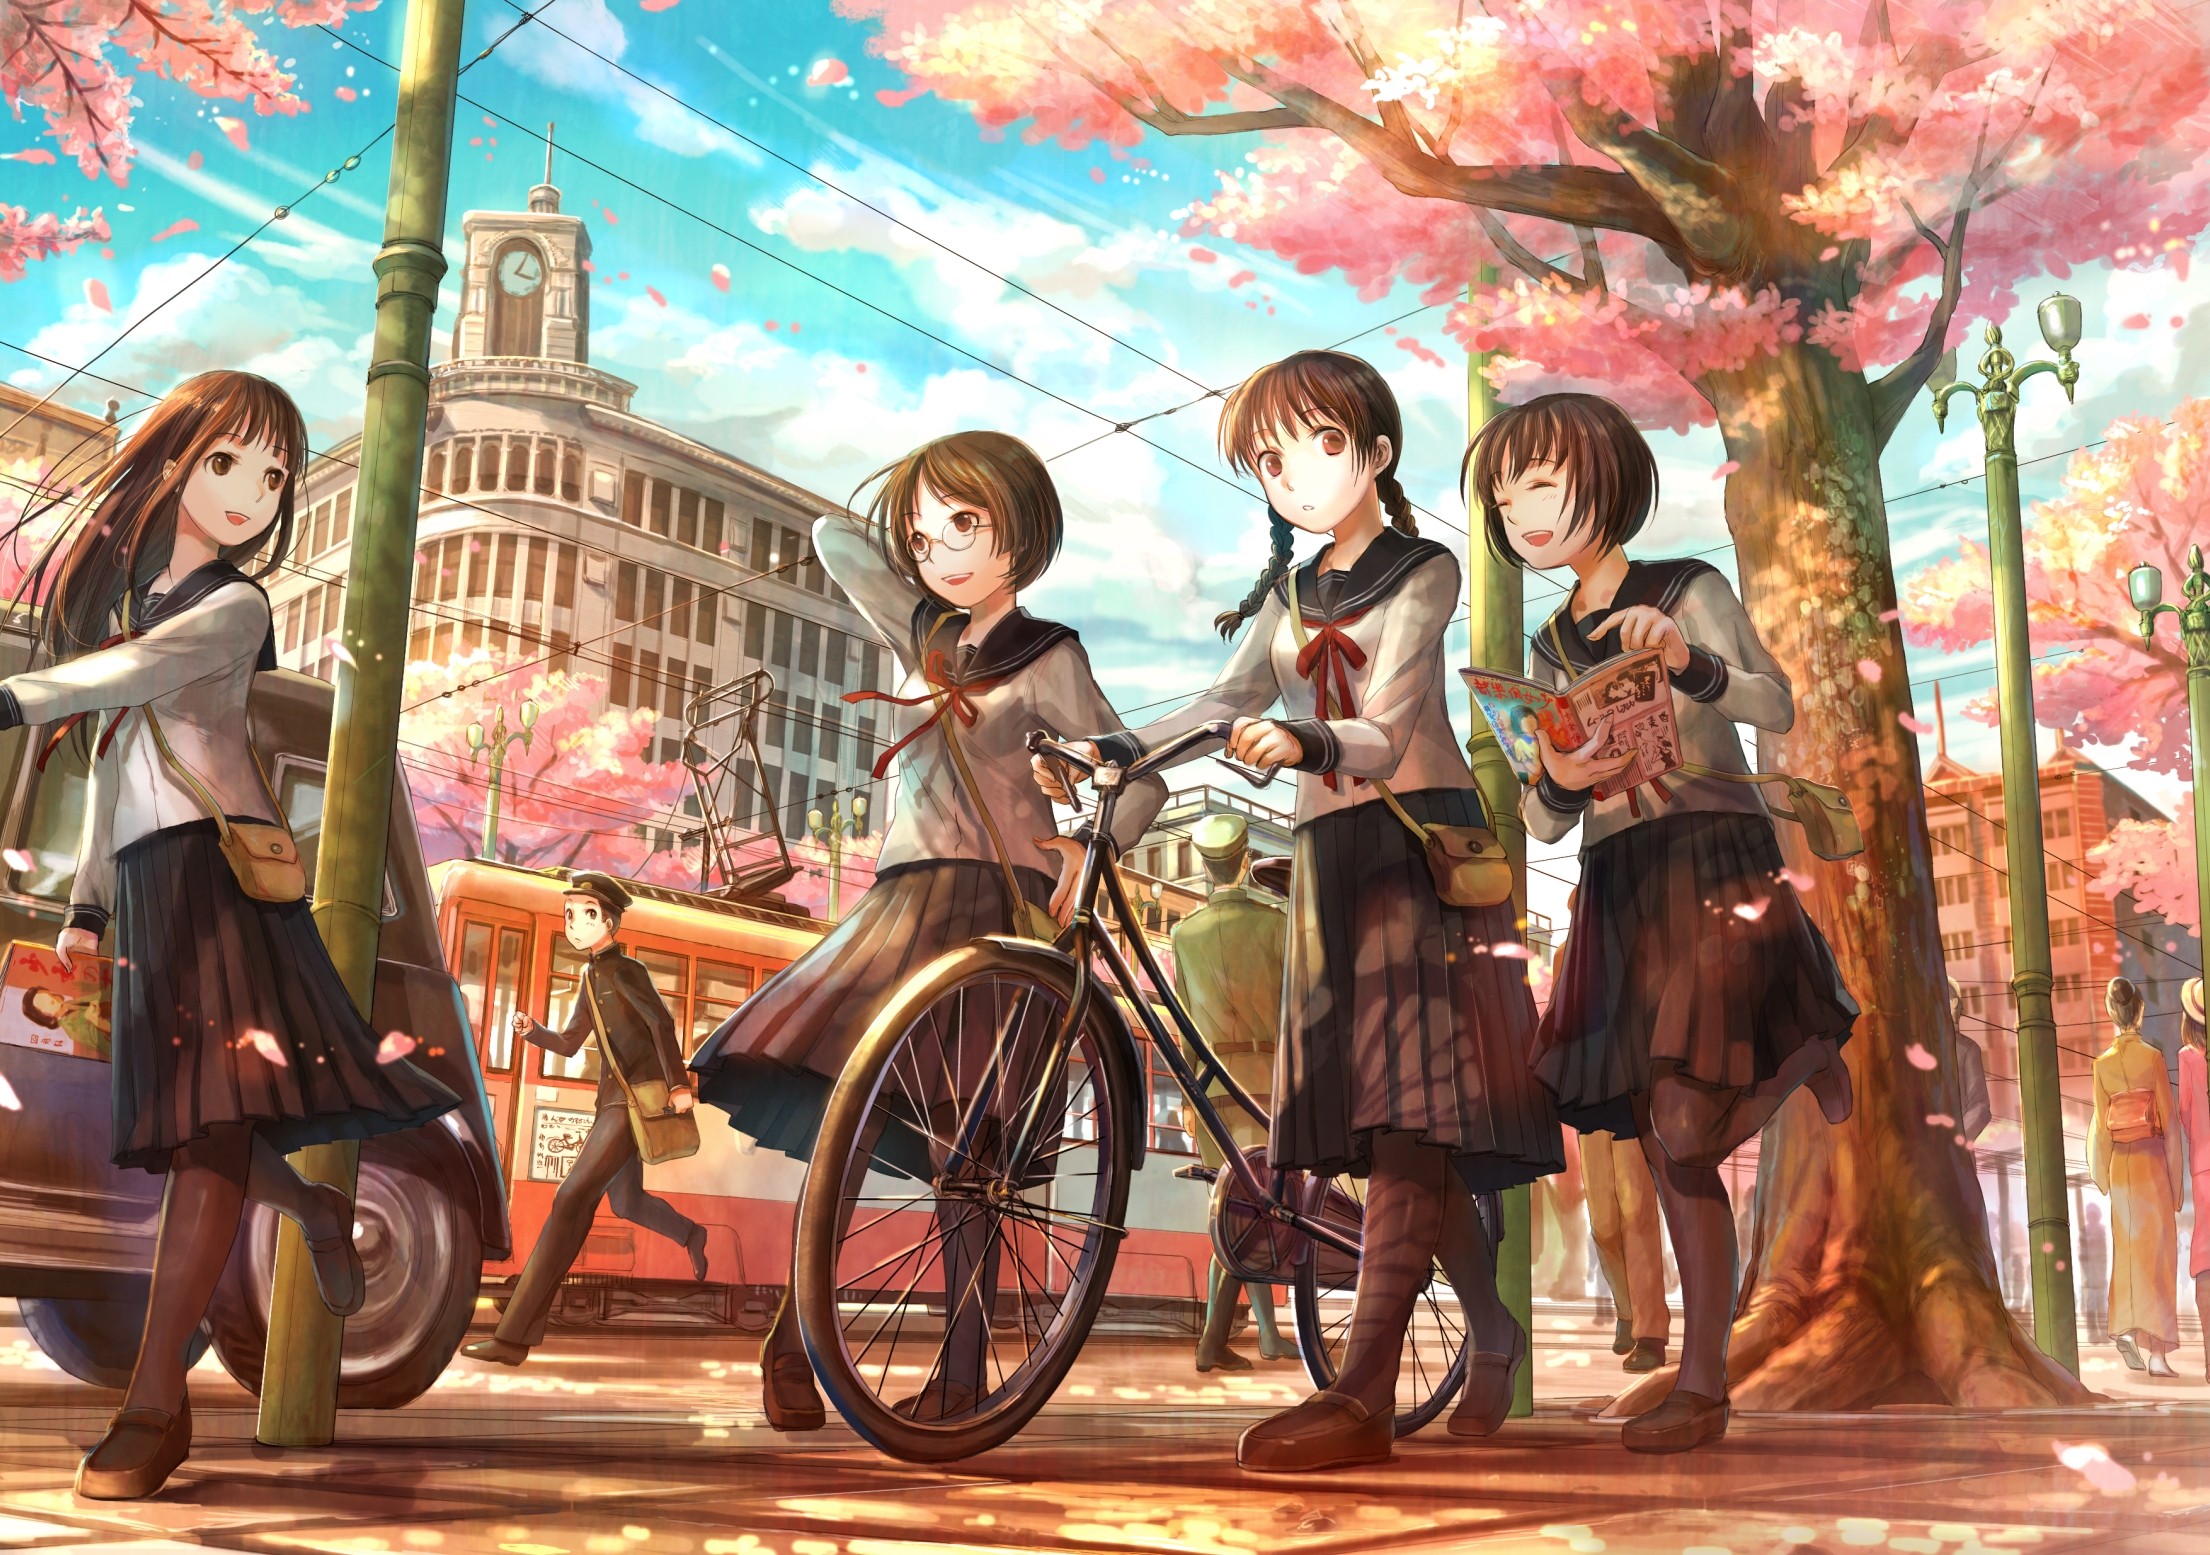 Anime 2210x1555 anime girls city bicycle women with bicycles vehicle women outdoors street tram brunette school uniform urban anime